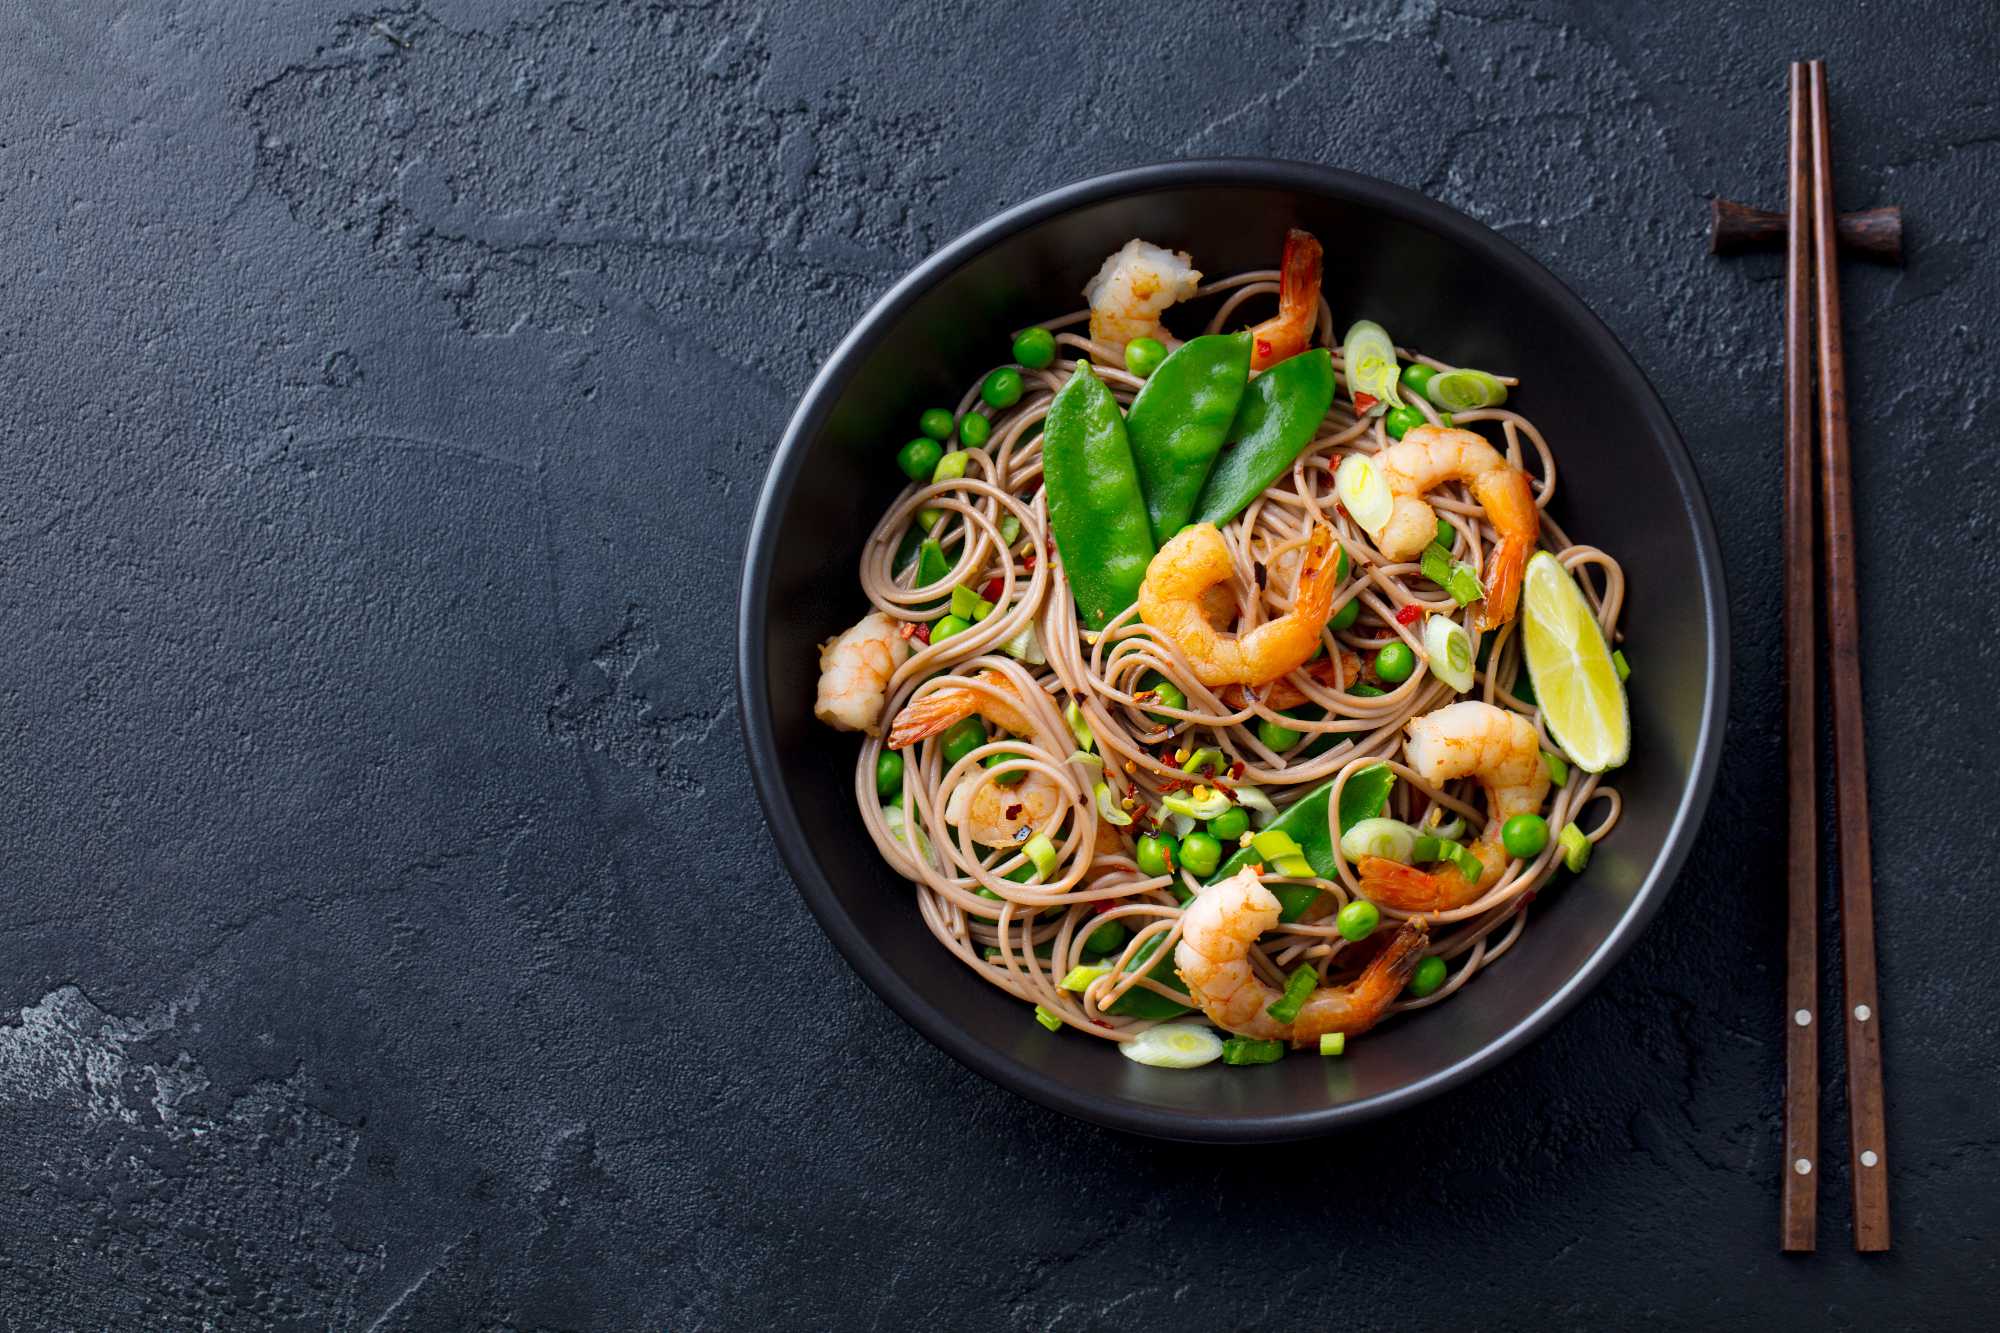 stir-fry-noodles-with-vegetables-and-shrimps-in-bl-SMA38T2.jpg